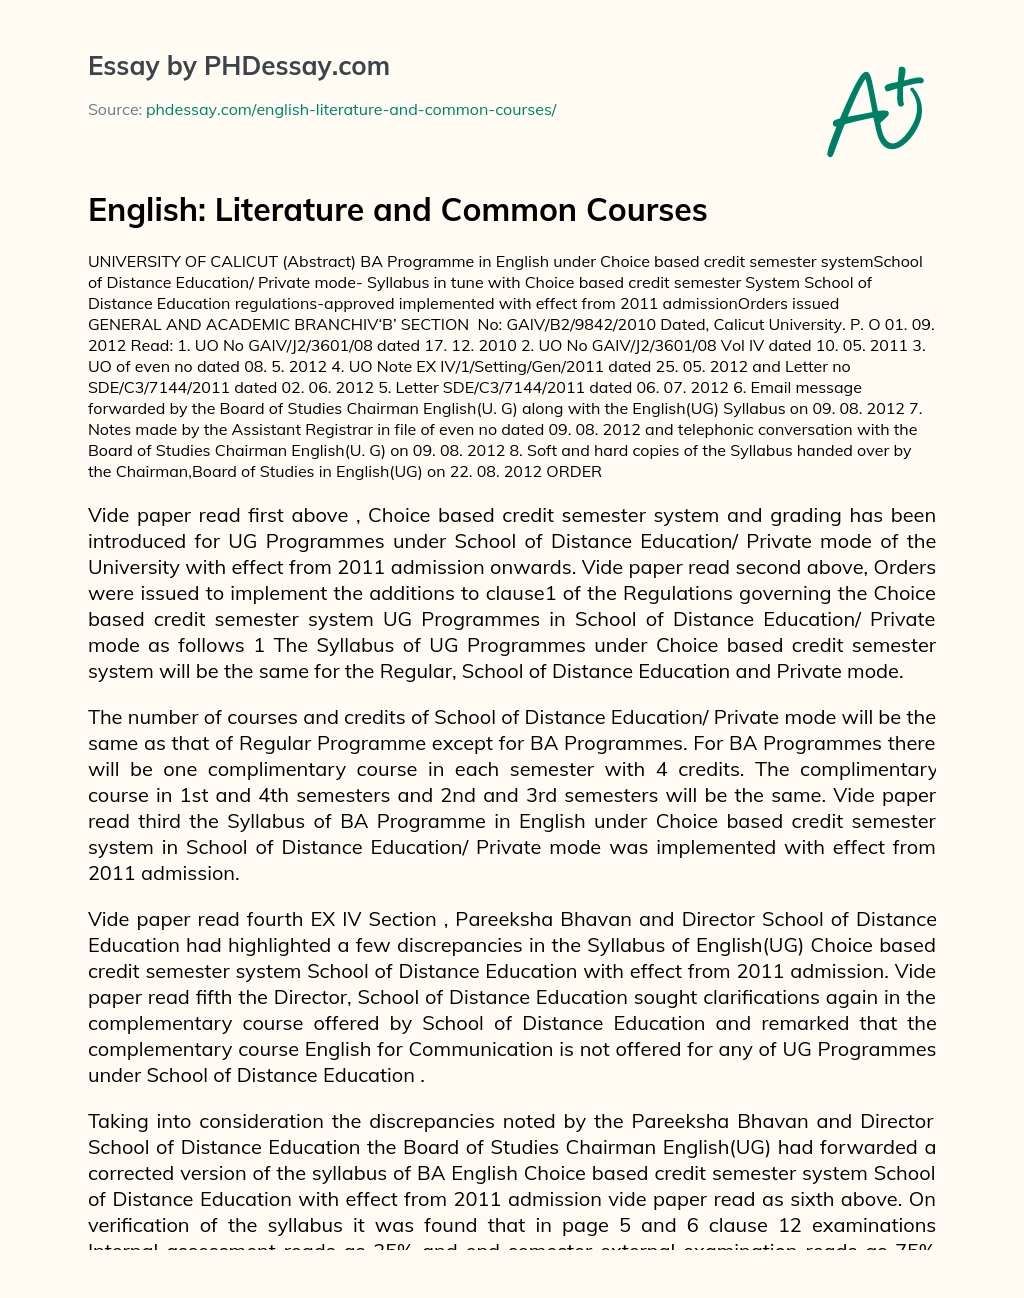 English: Literature and Common Courses essay